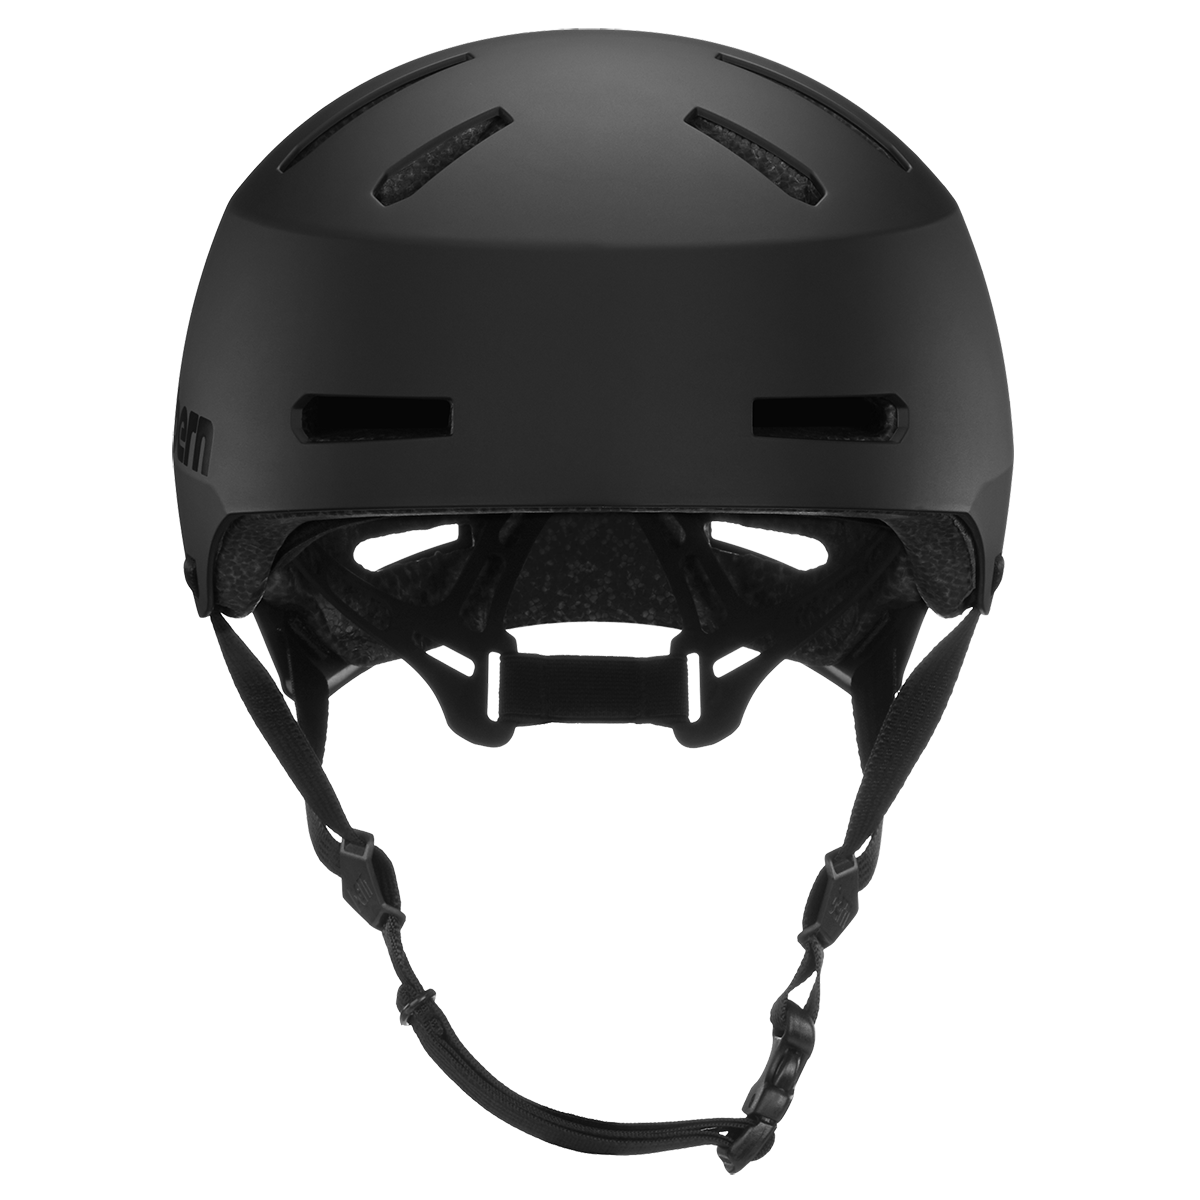 BERN - Macon 2.0 EPS (Matte Black) Helmet